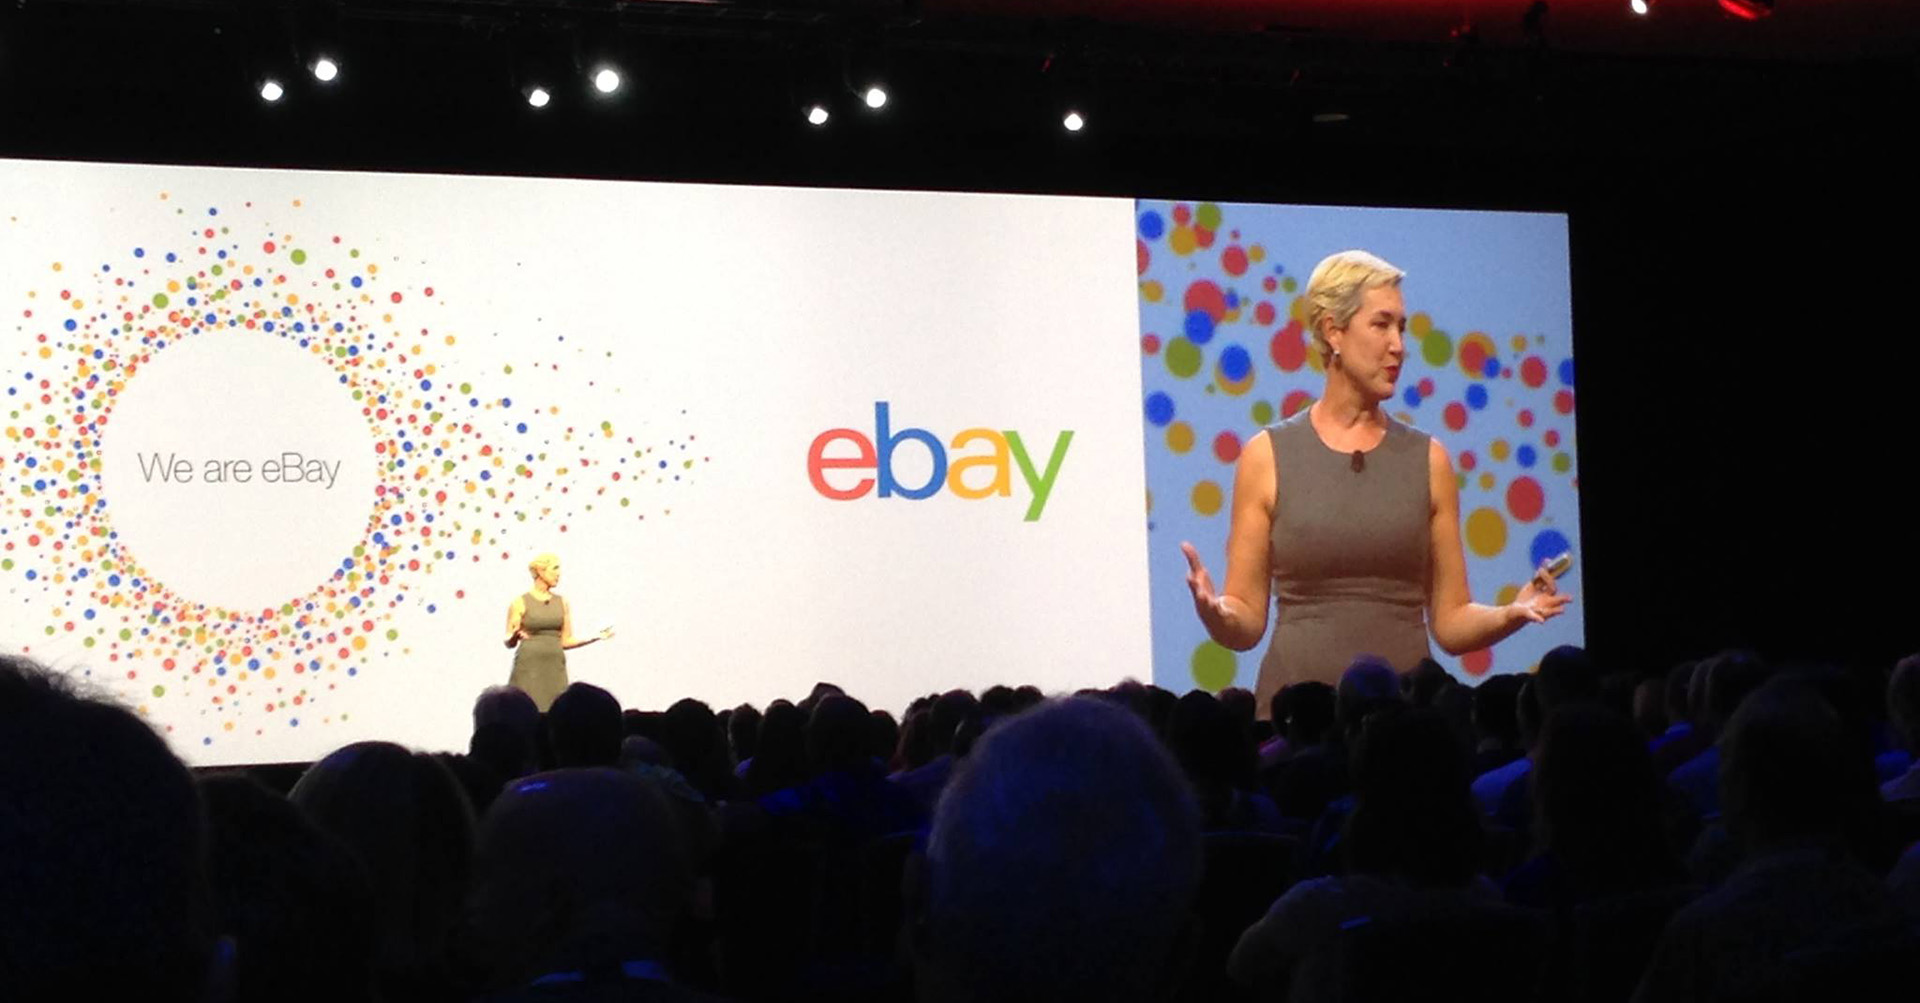 sarah speaking on ebay stage